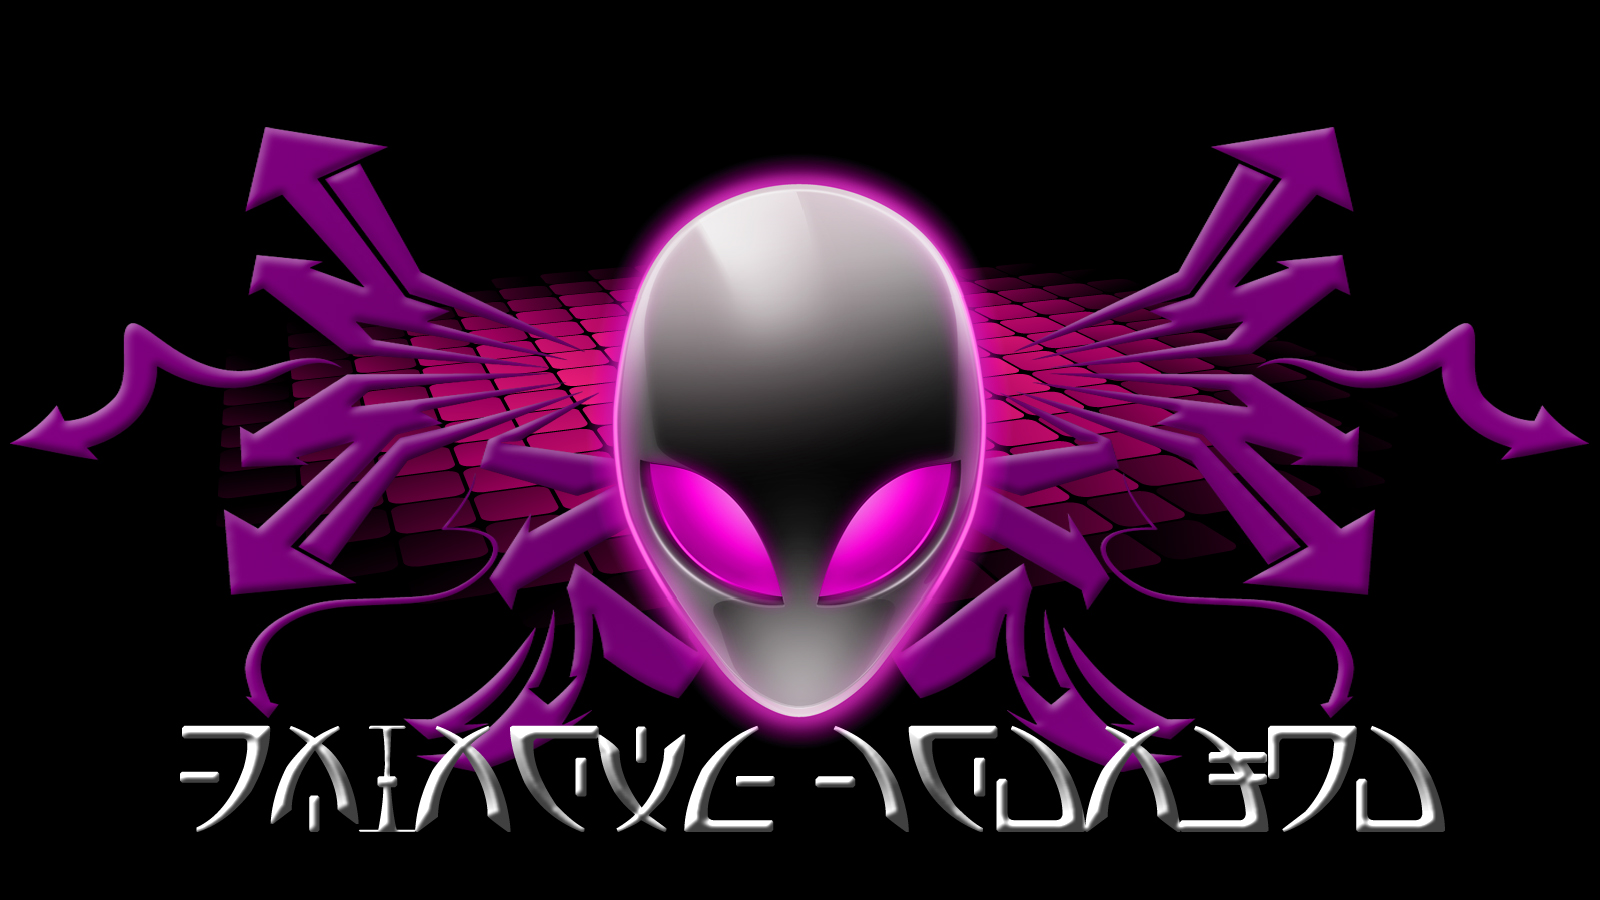 Alienware Wallpaper By Lwarmachinel Dreo